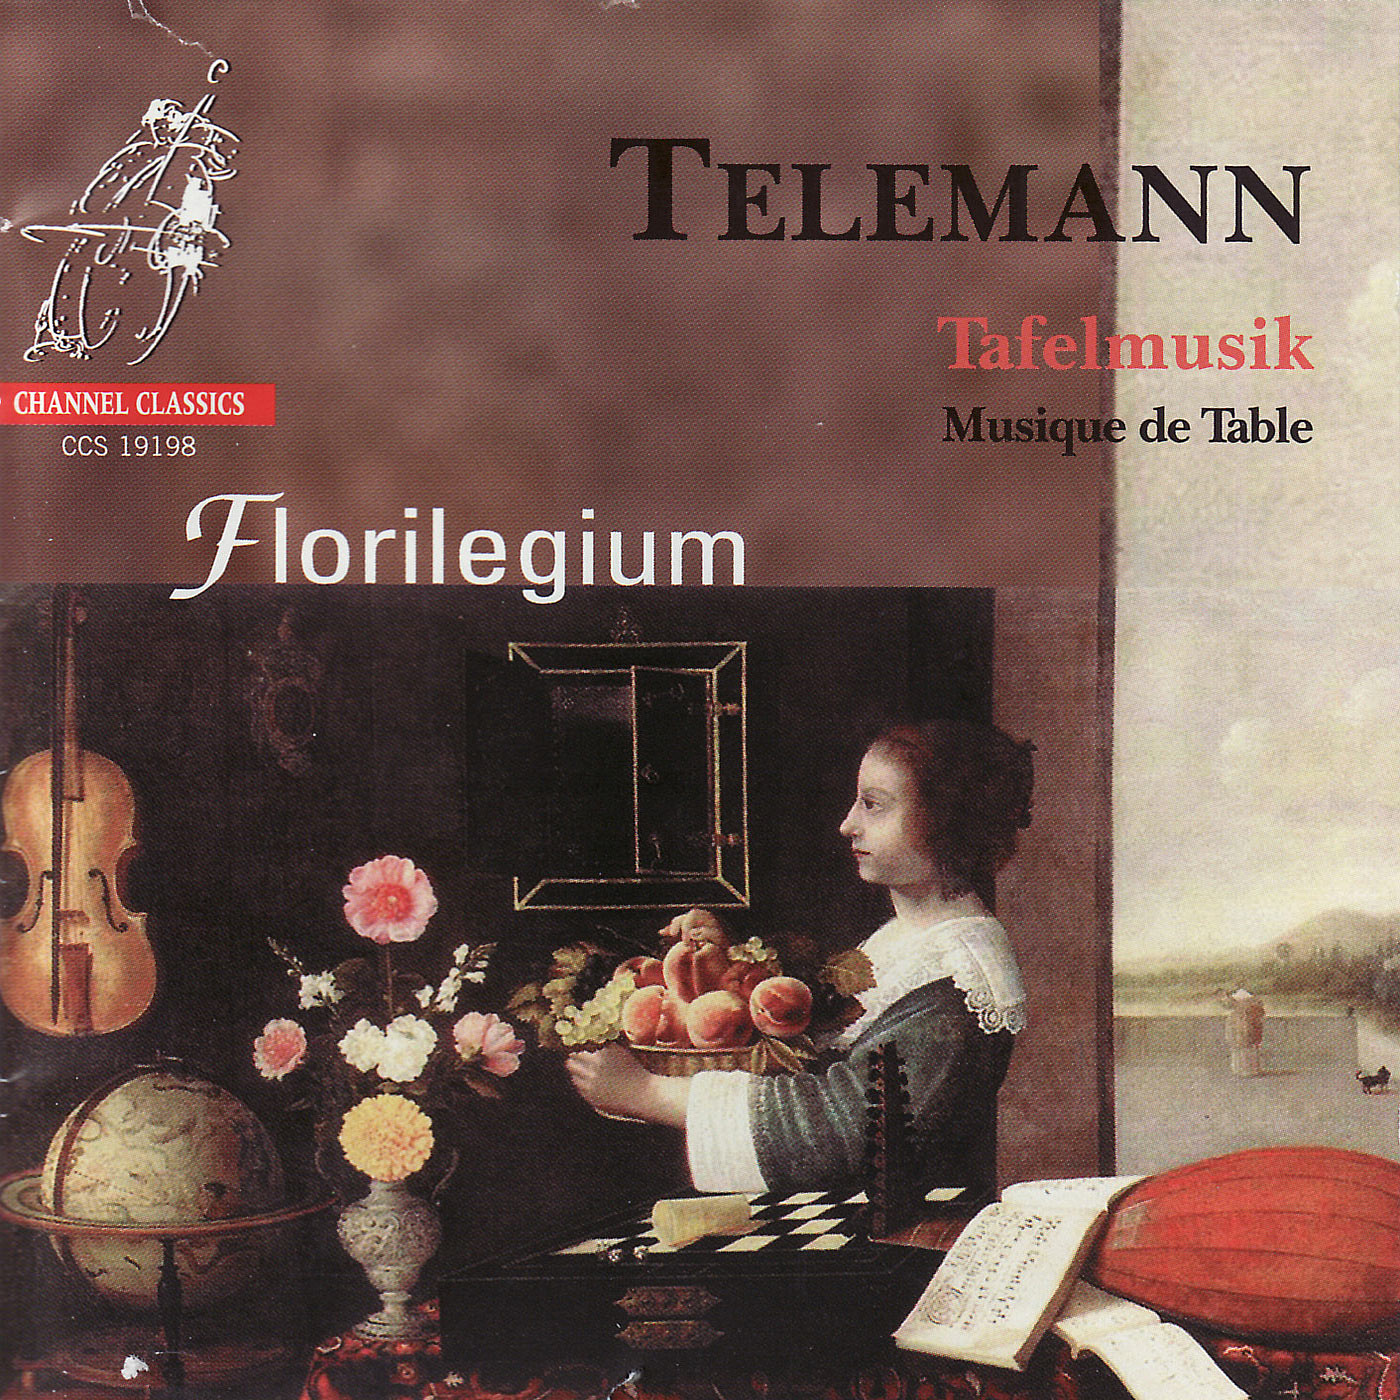 Florilegium, Walter van Hauwe – G. PH. Telemann Tafelmusik (2007/2017) [FLAC 24bit/192kHz]